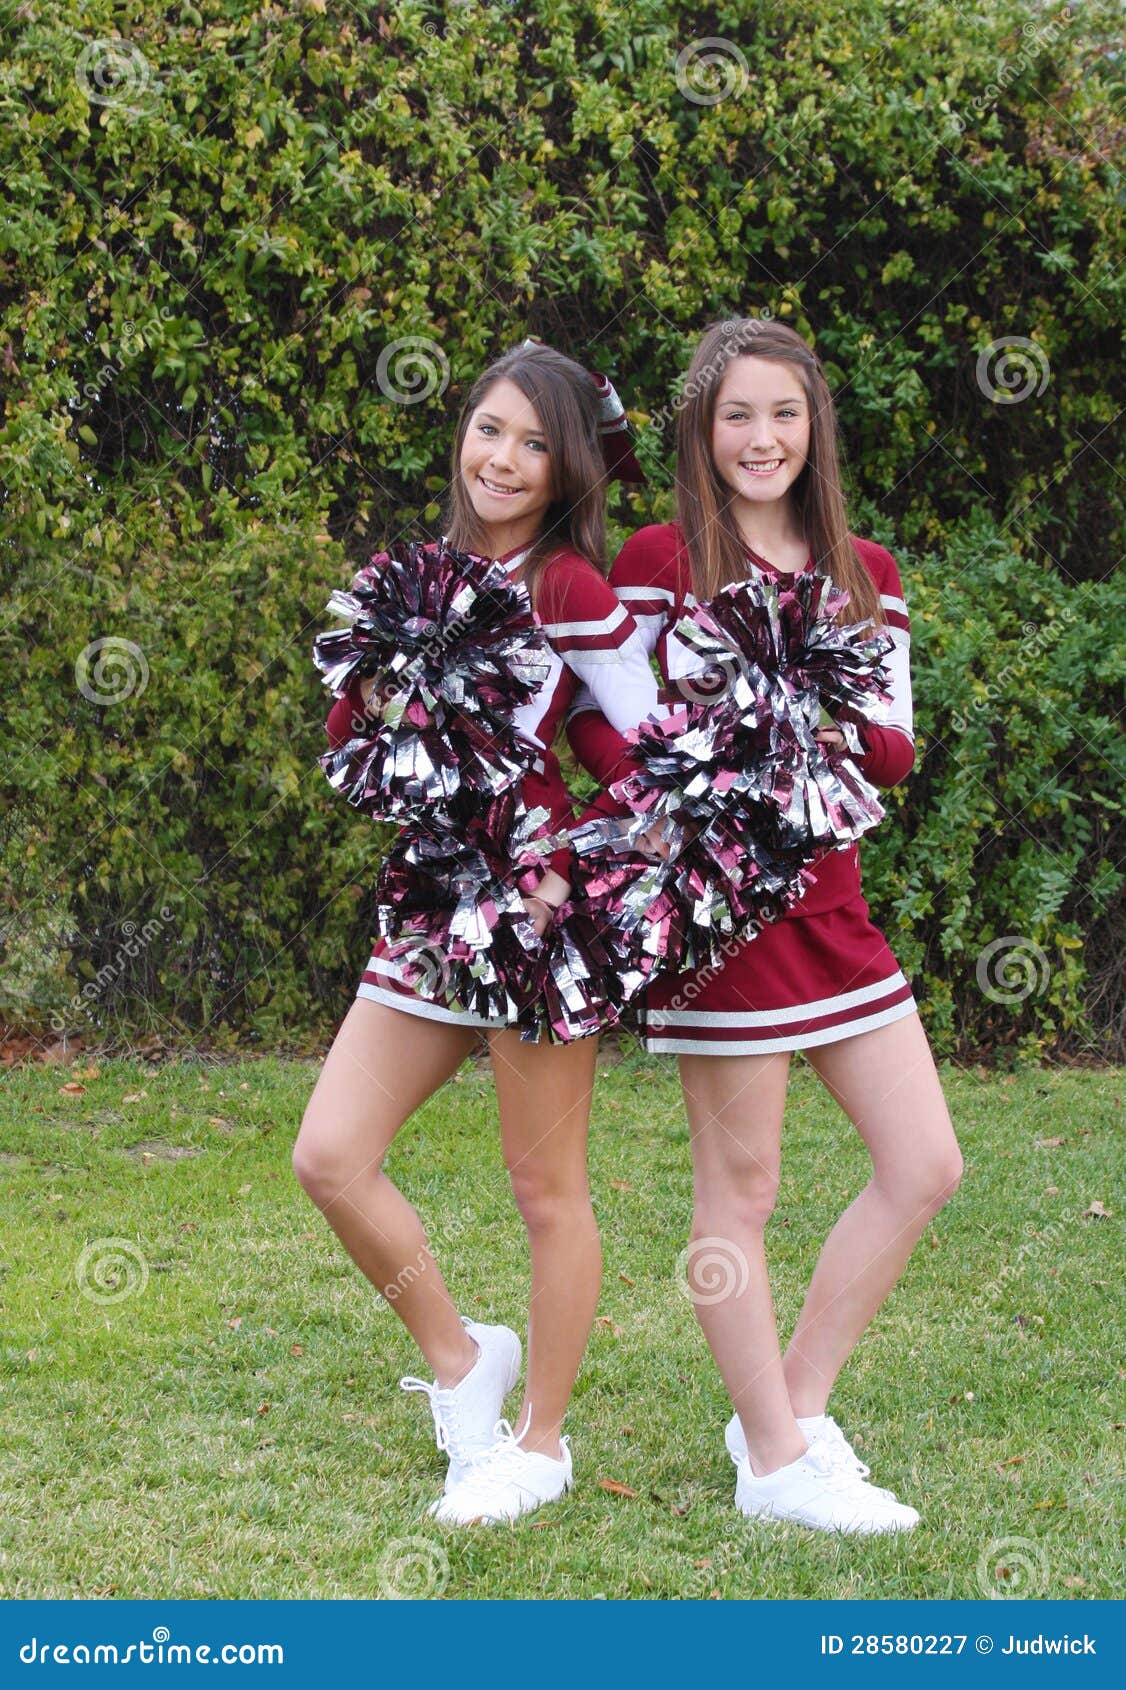 amber fiedler recommends teen cheerleader photos pic